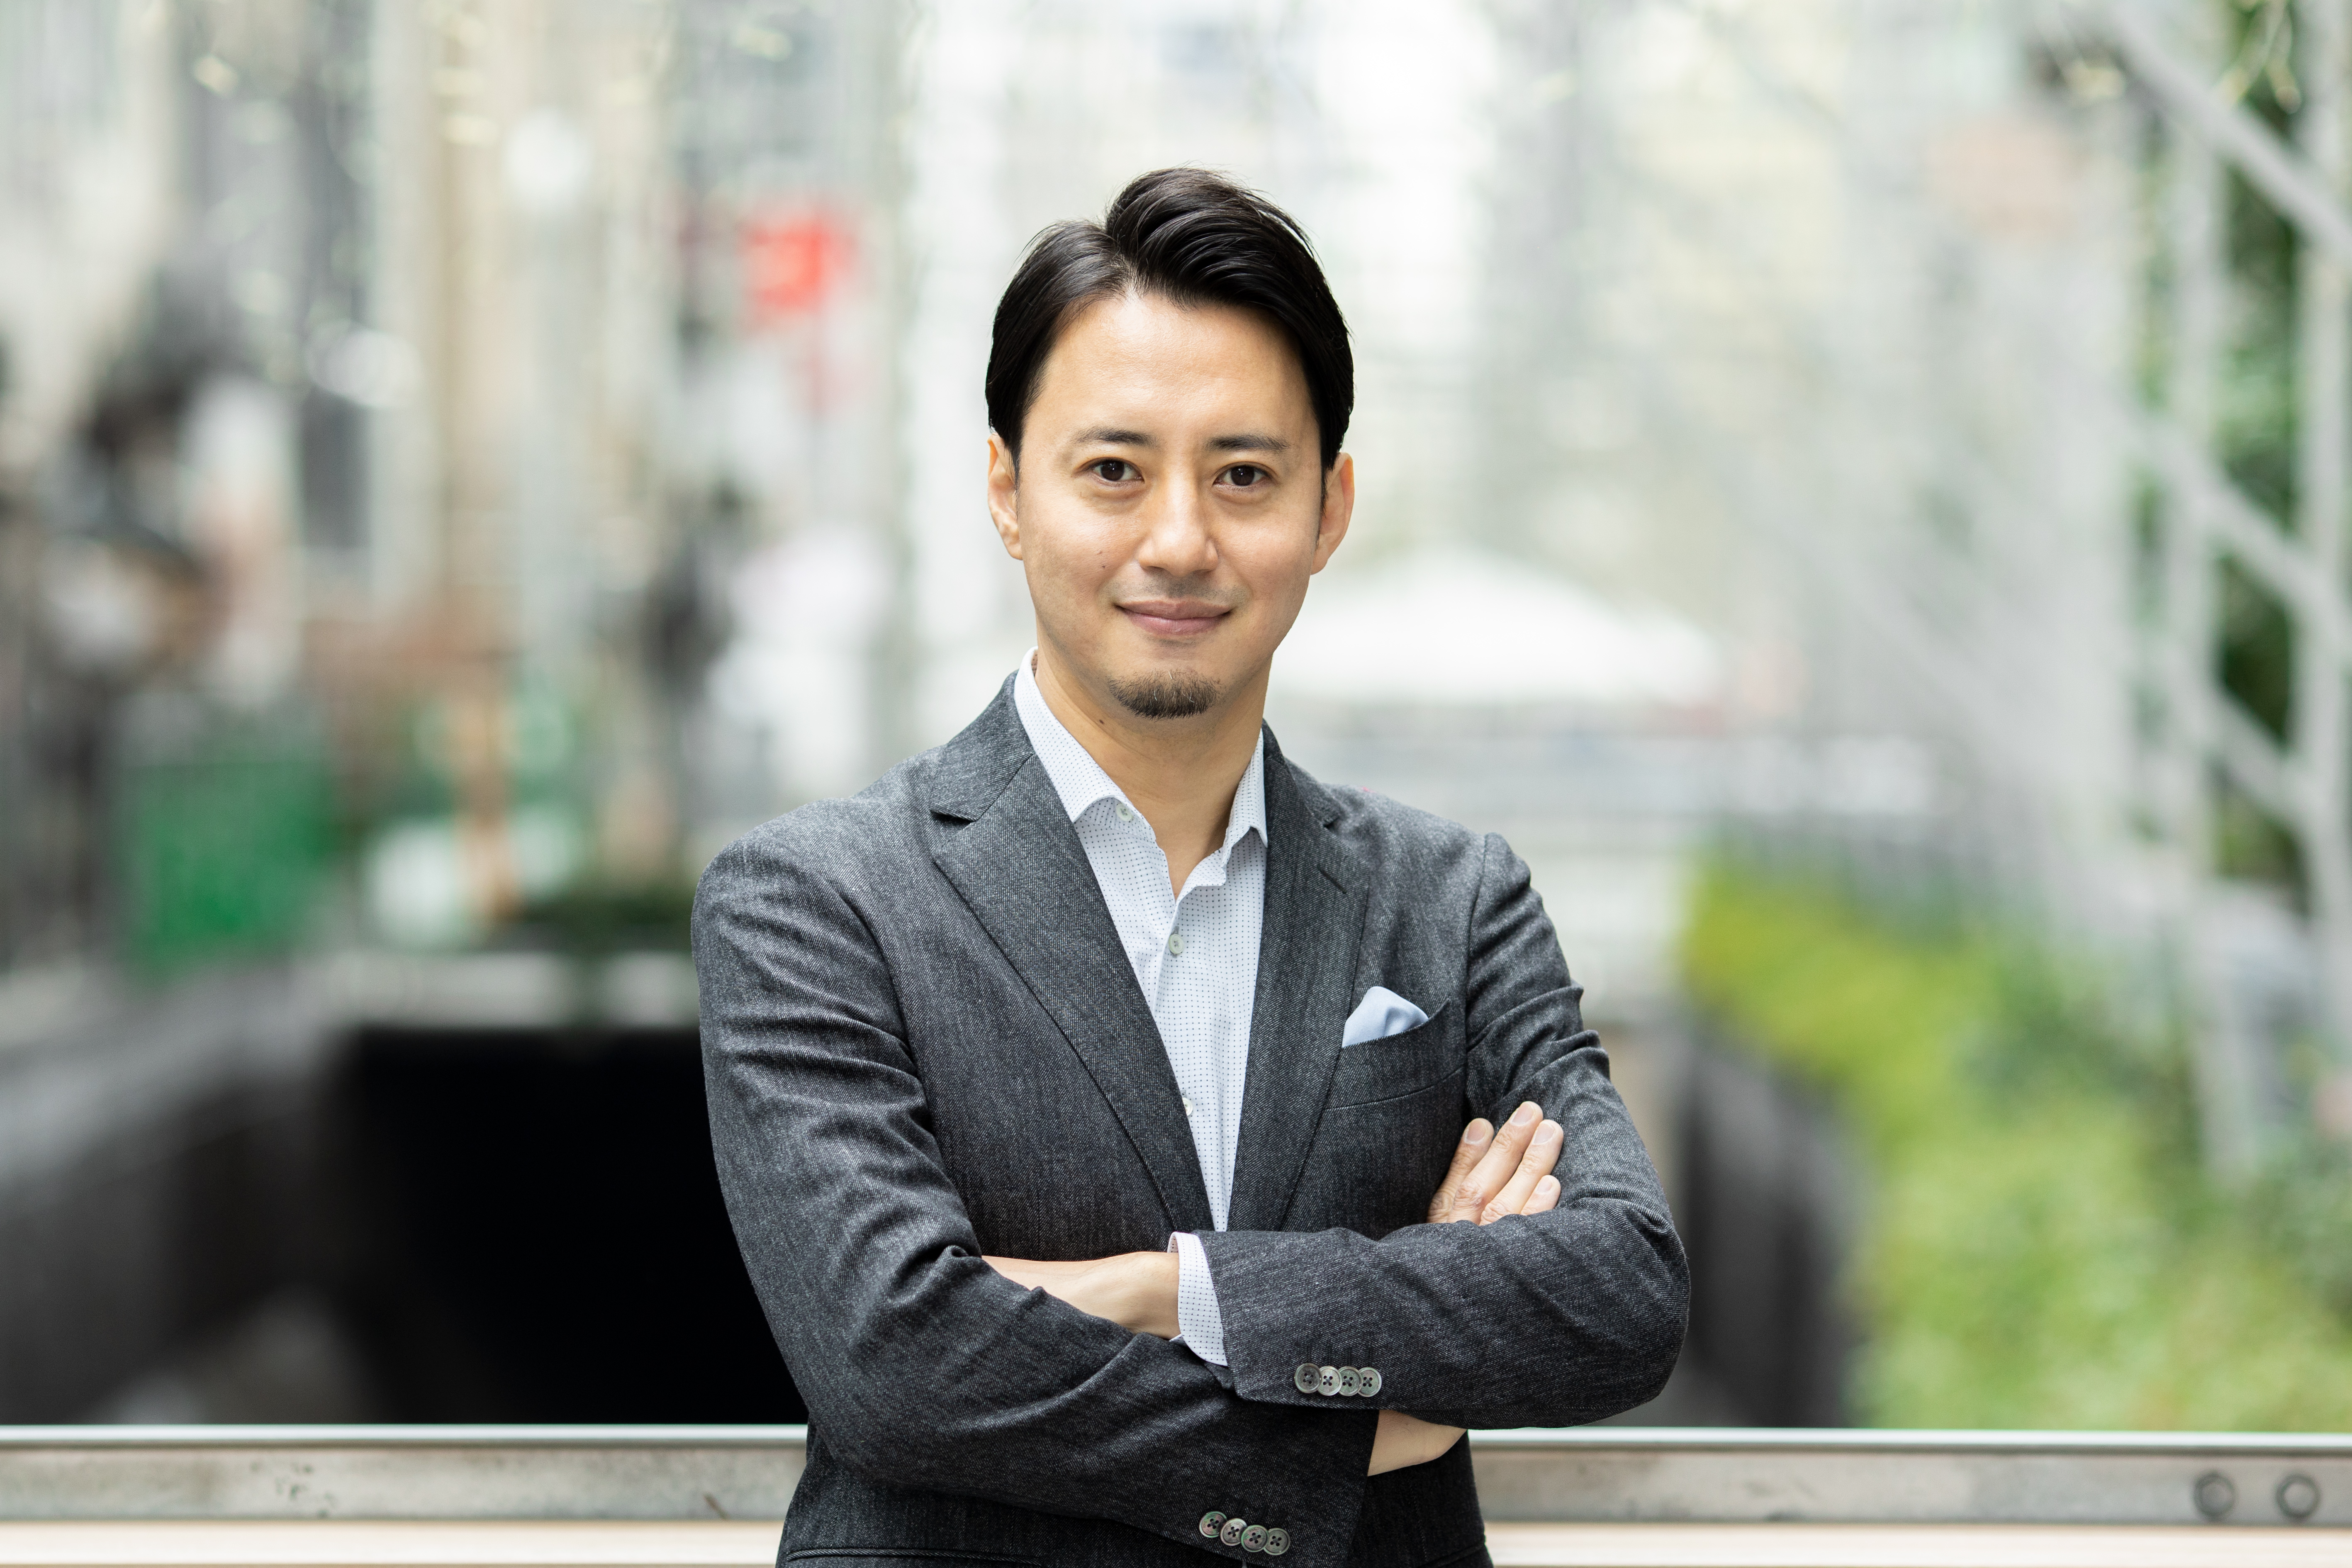 Masami Takahashi, the president of Scrum Studios